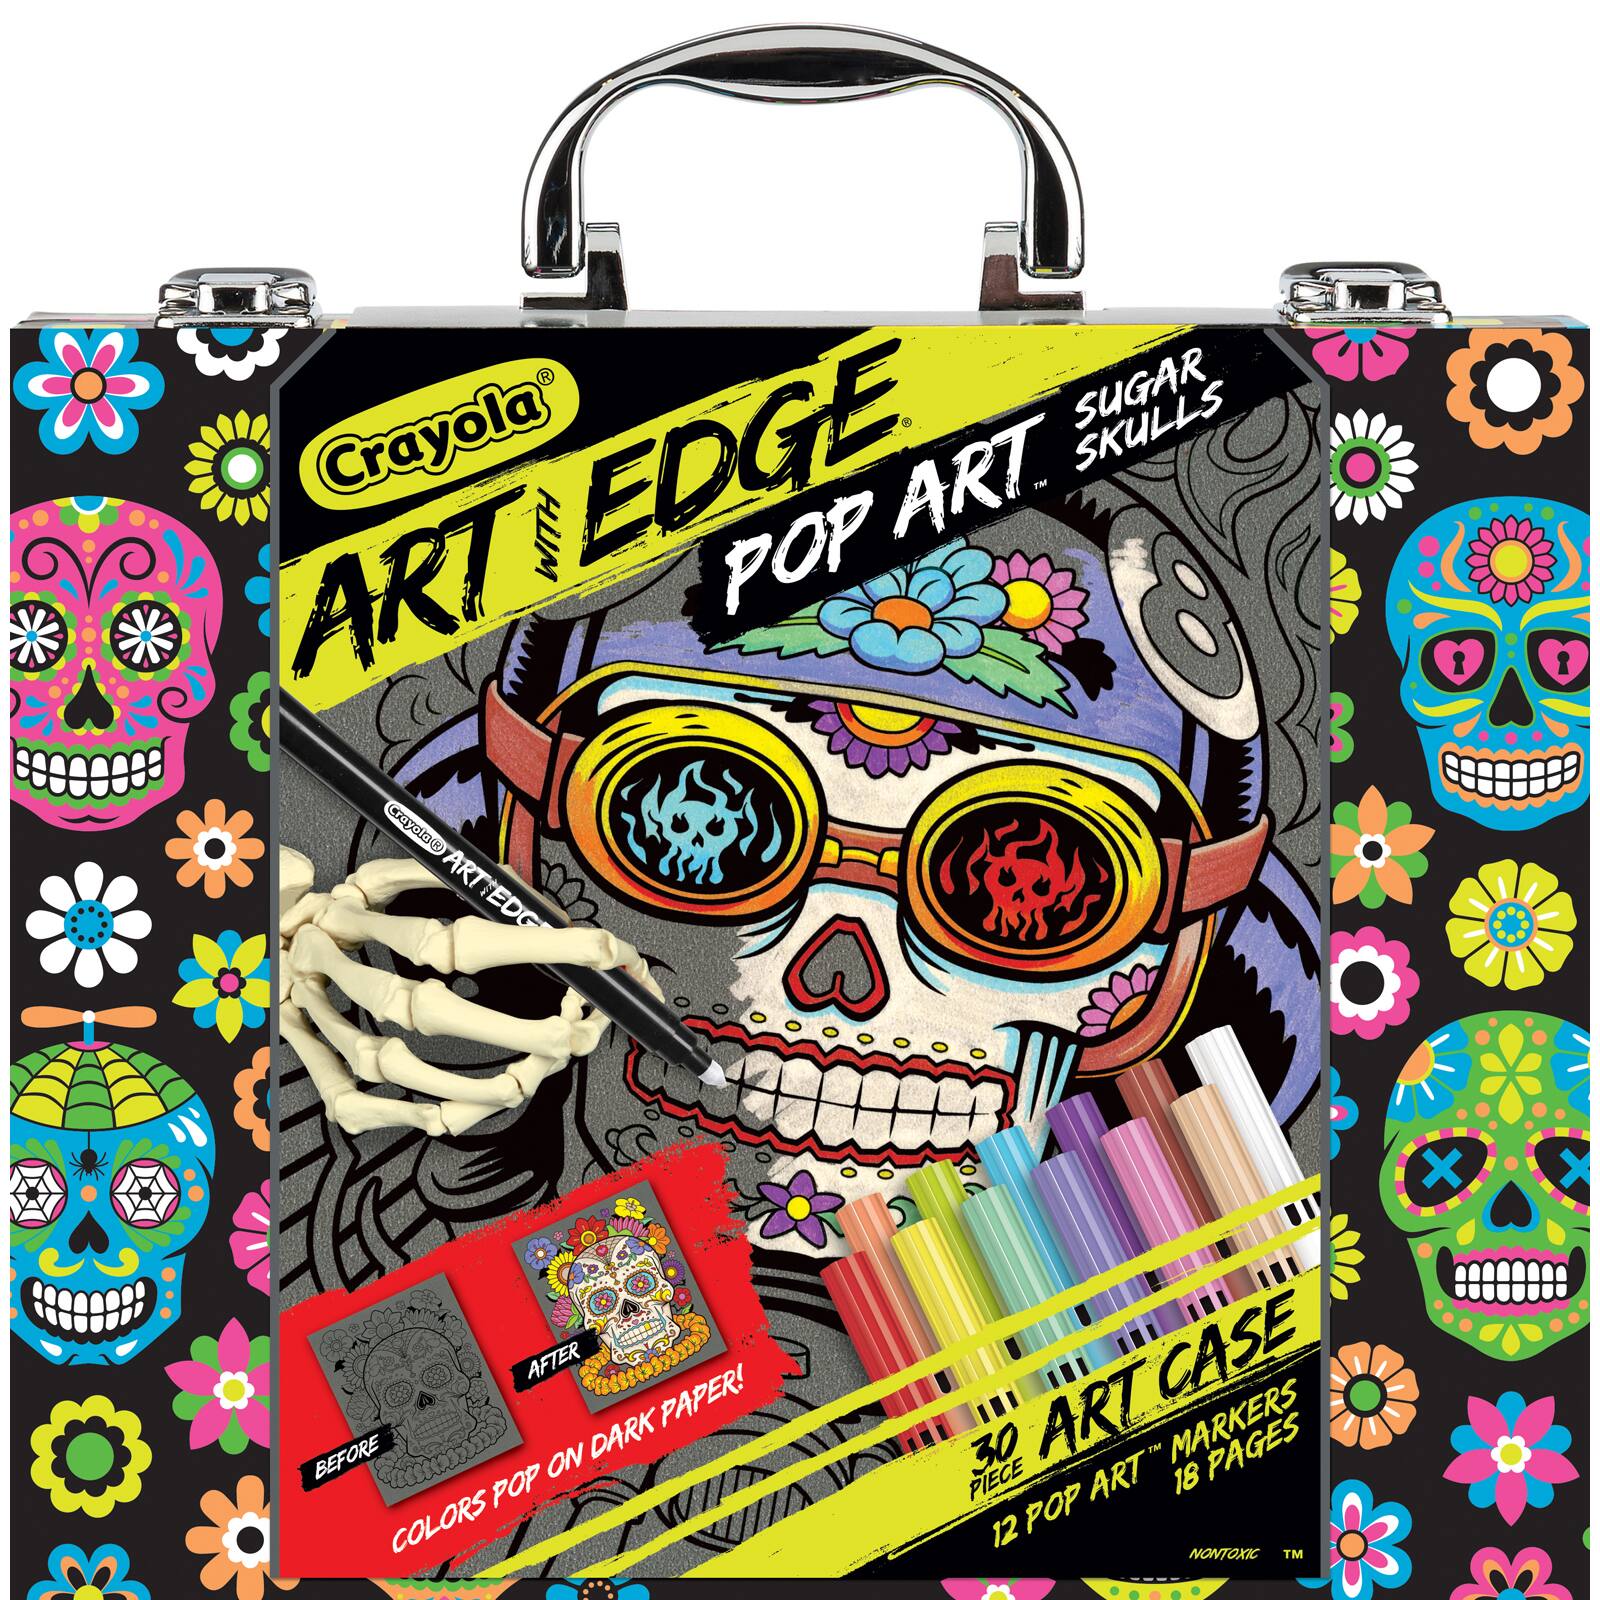 Buy the Crayola Art with Edge Pop Art Sugar Skulls Art